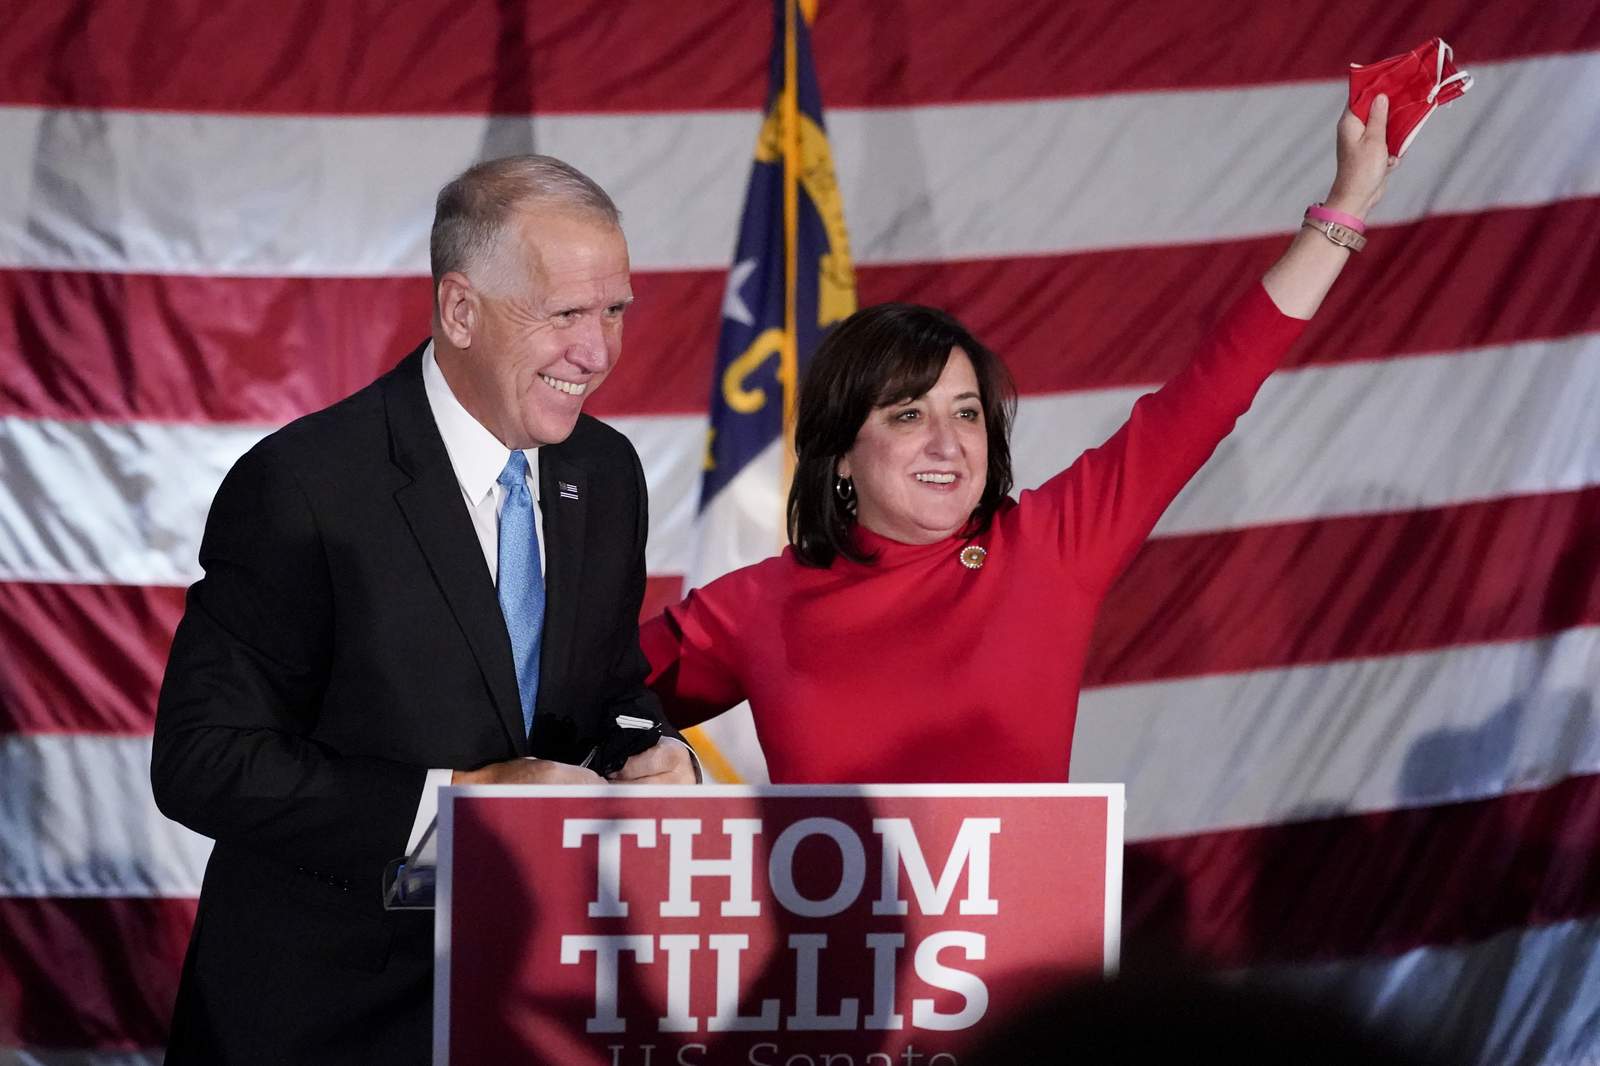 Cunningham concedes to US Sen. Tillis in North Carolina